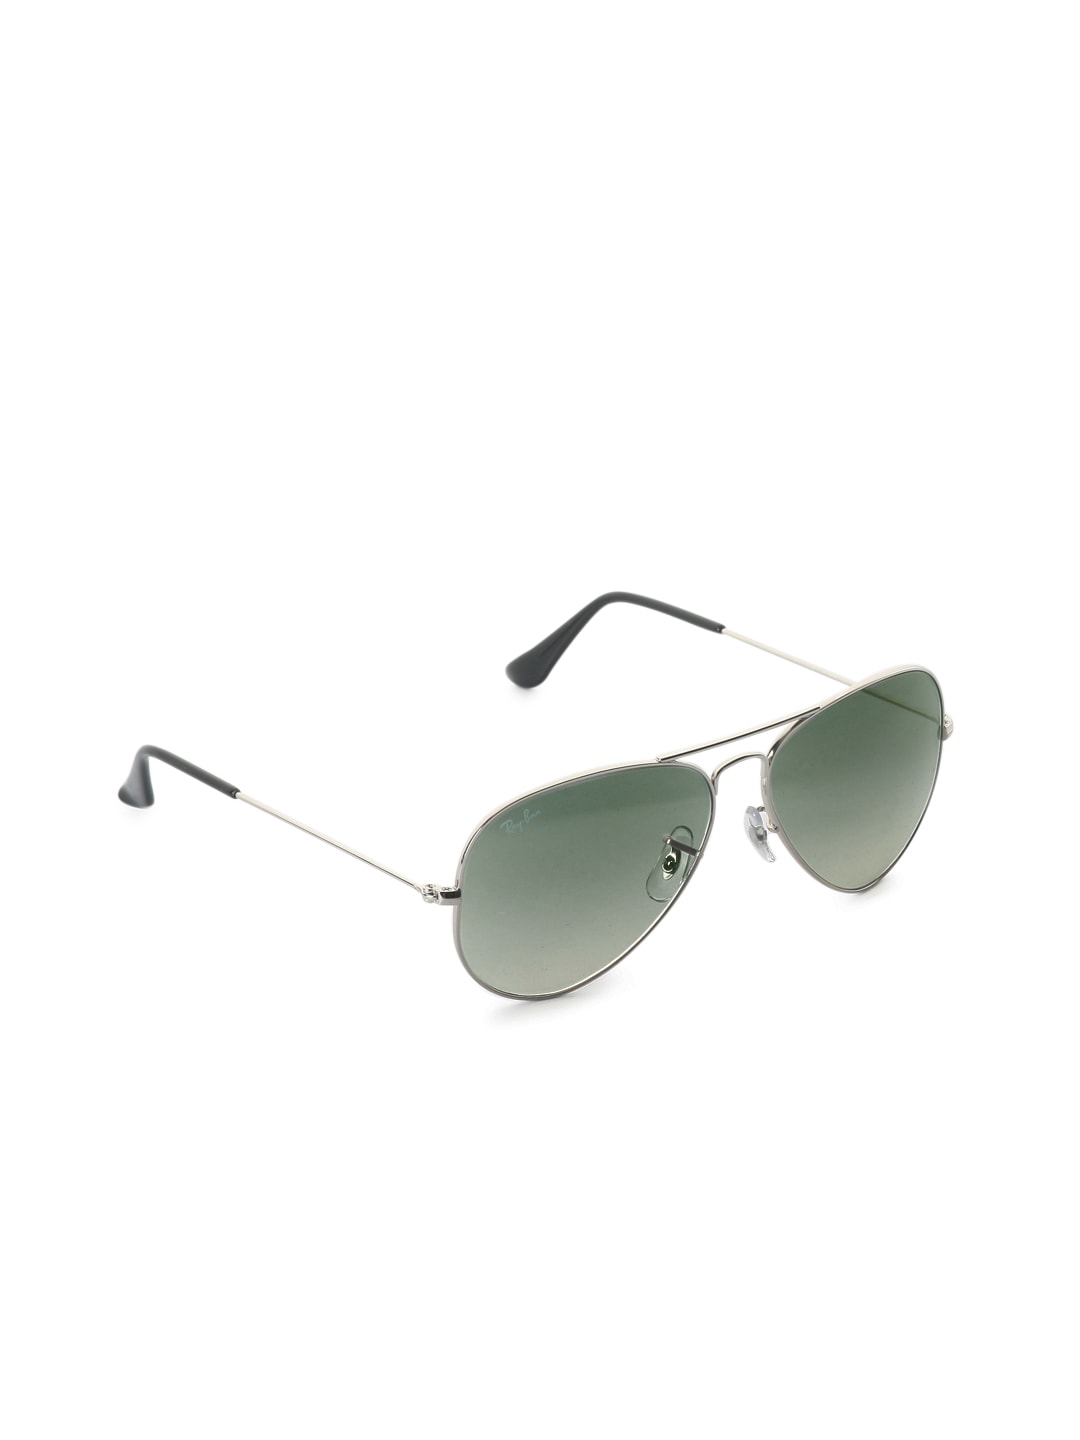 Ray-Ban Men Aviator Steel Sunglasses